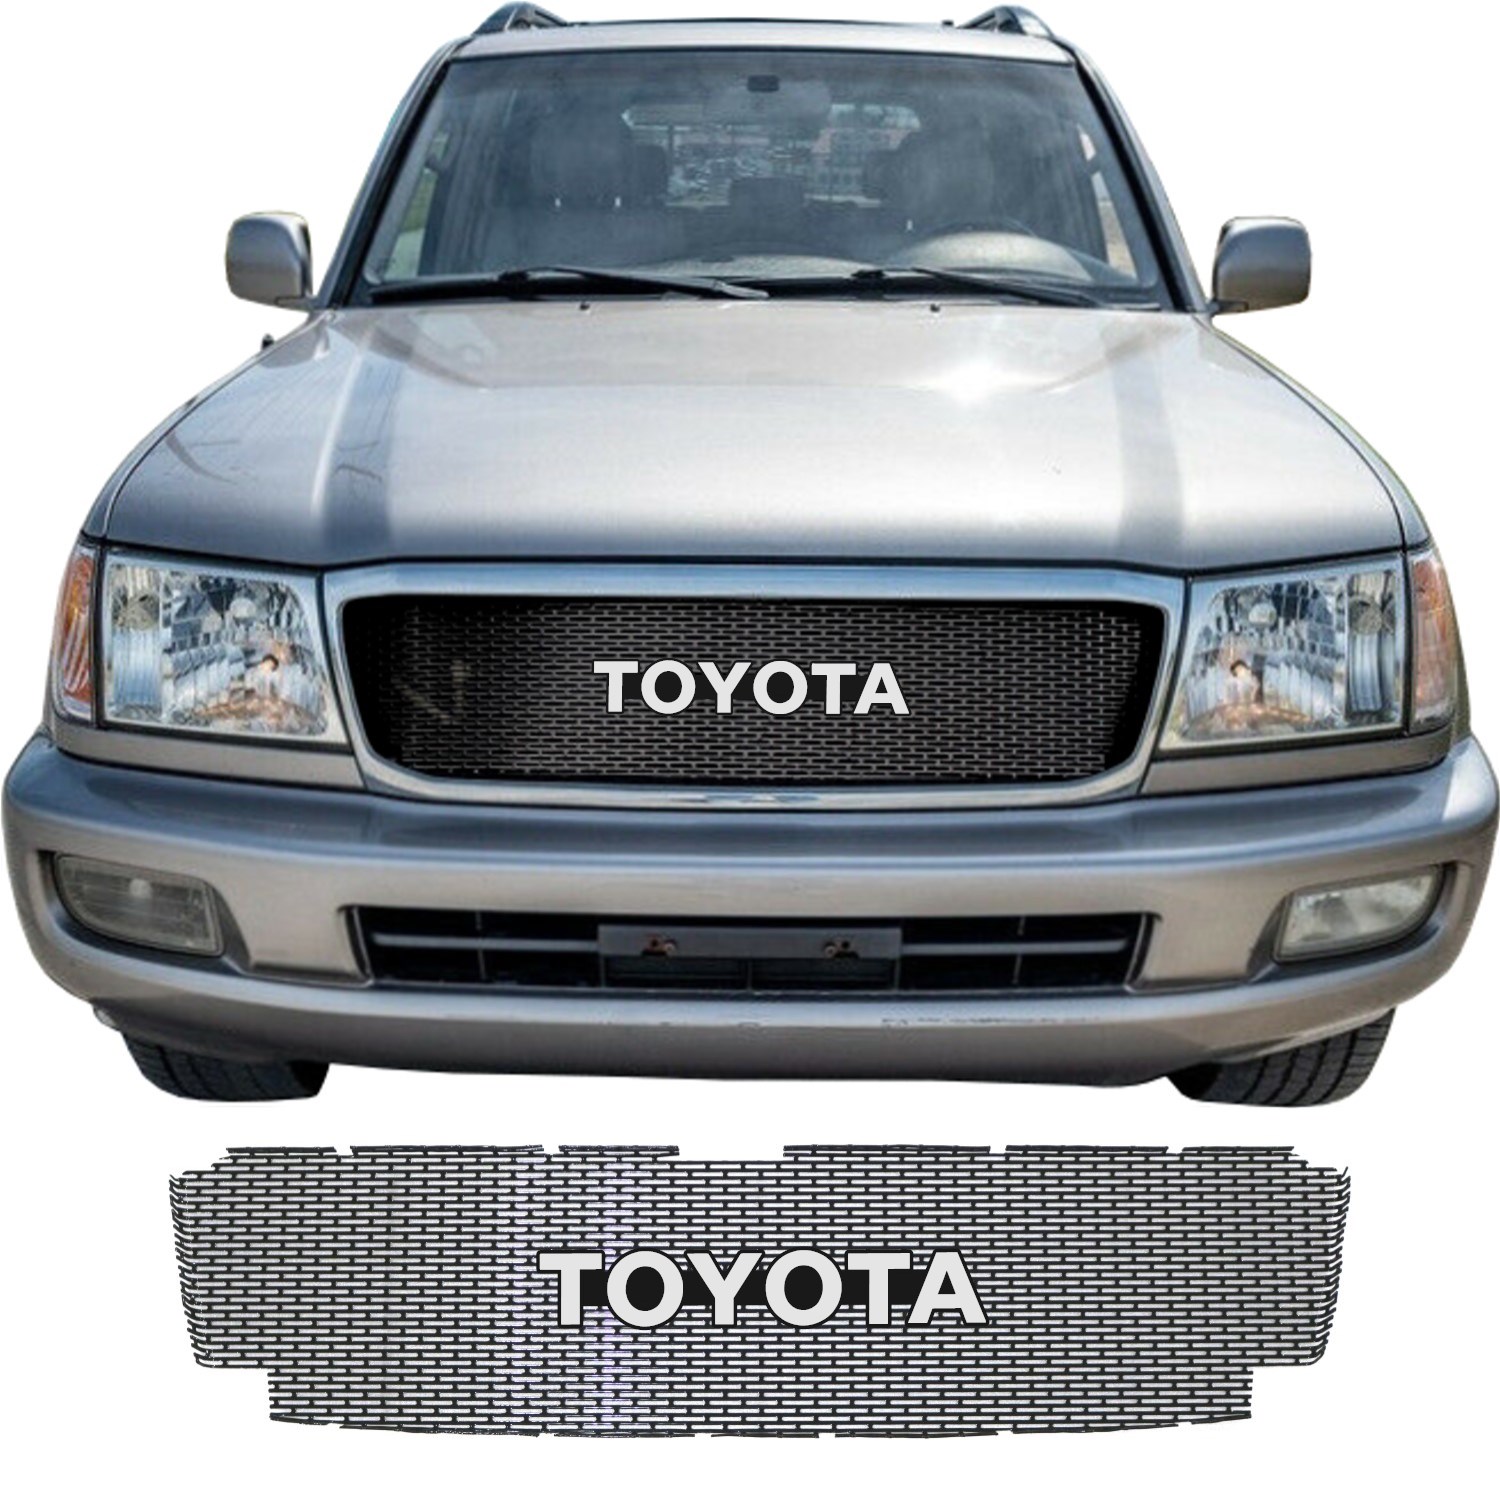 2003 - 2005 Toyota Land Cruiser Series 100 Grill Mesh and Toyota Emblem #1